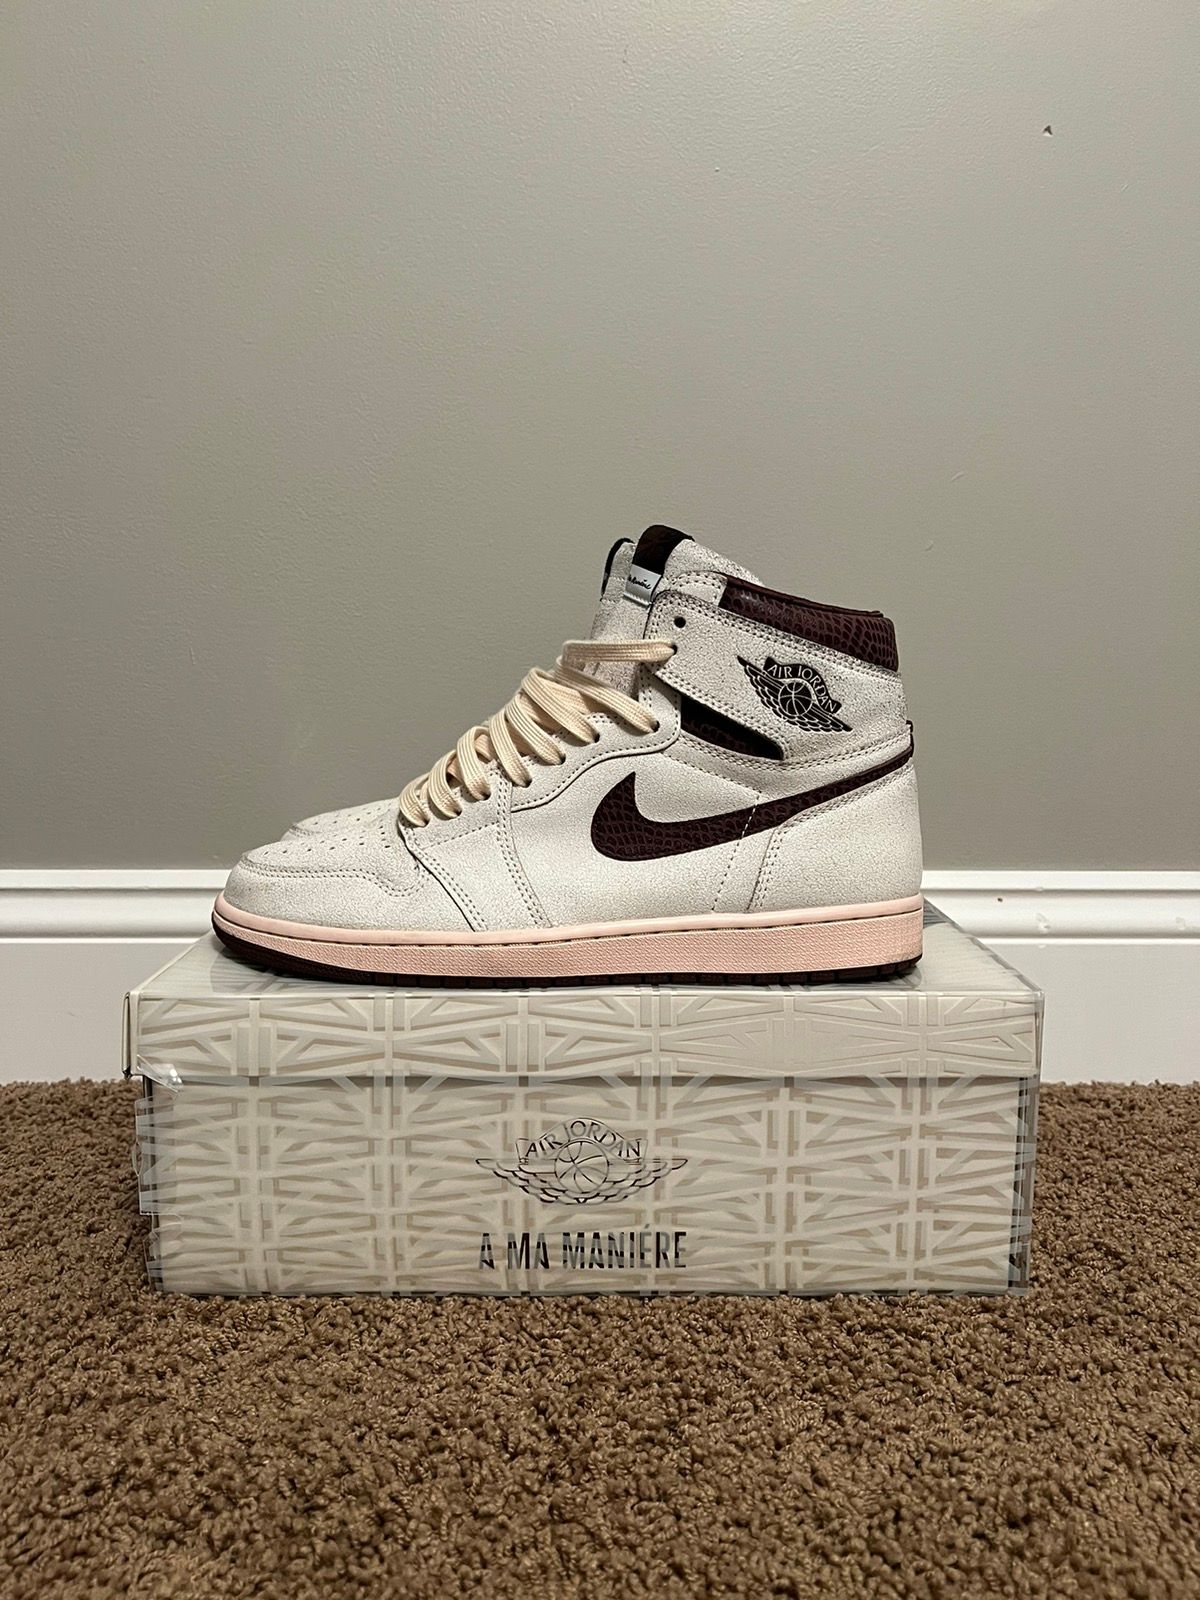 Pre-owned Jordan Nike Jordan 1 High Og “a Ma Maniére” Size 11 Shoes In White